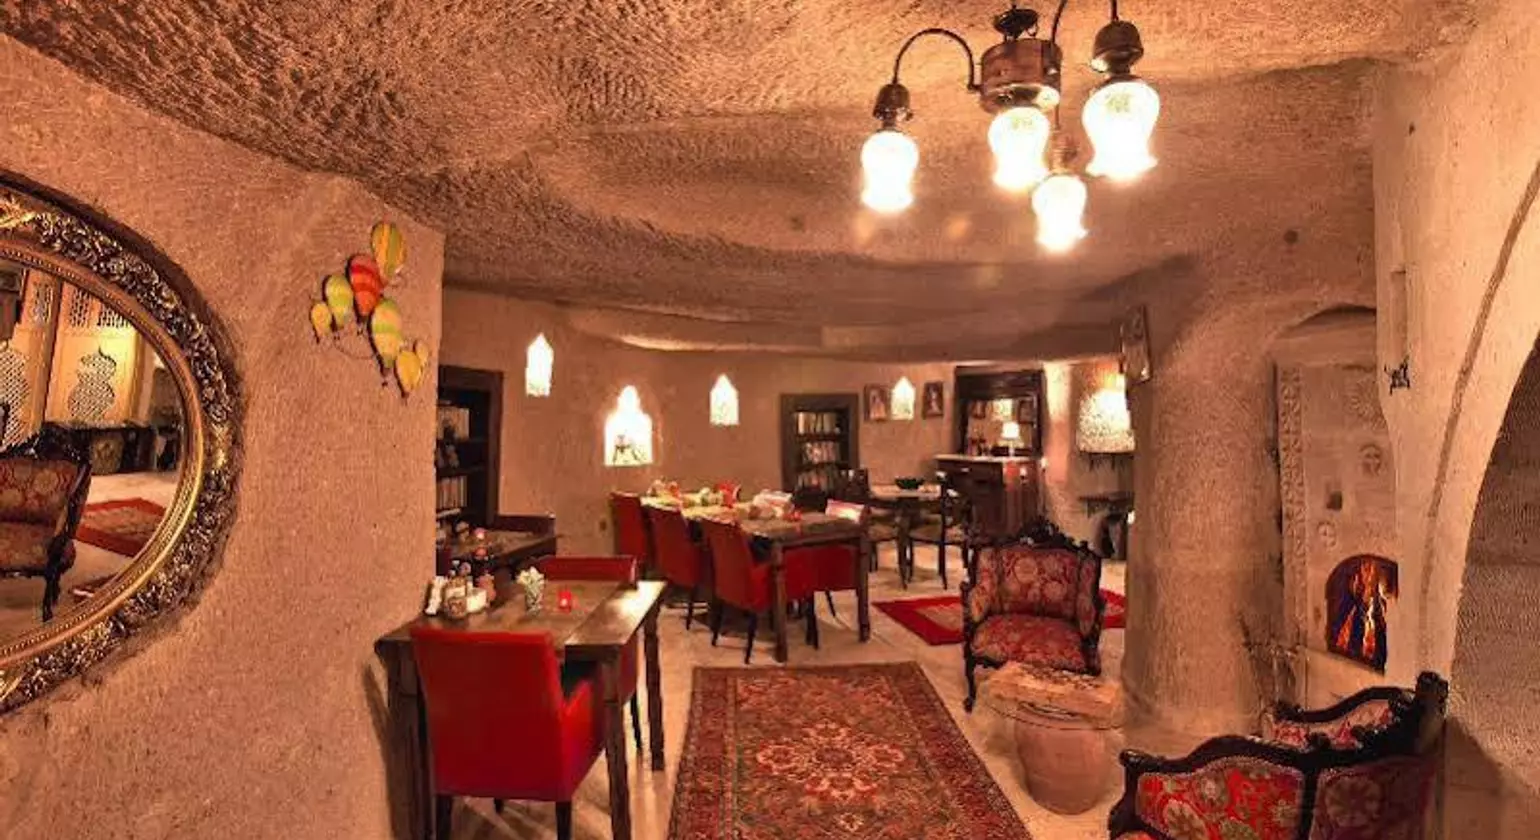 Oyku Evi Cave Hotel